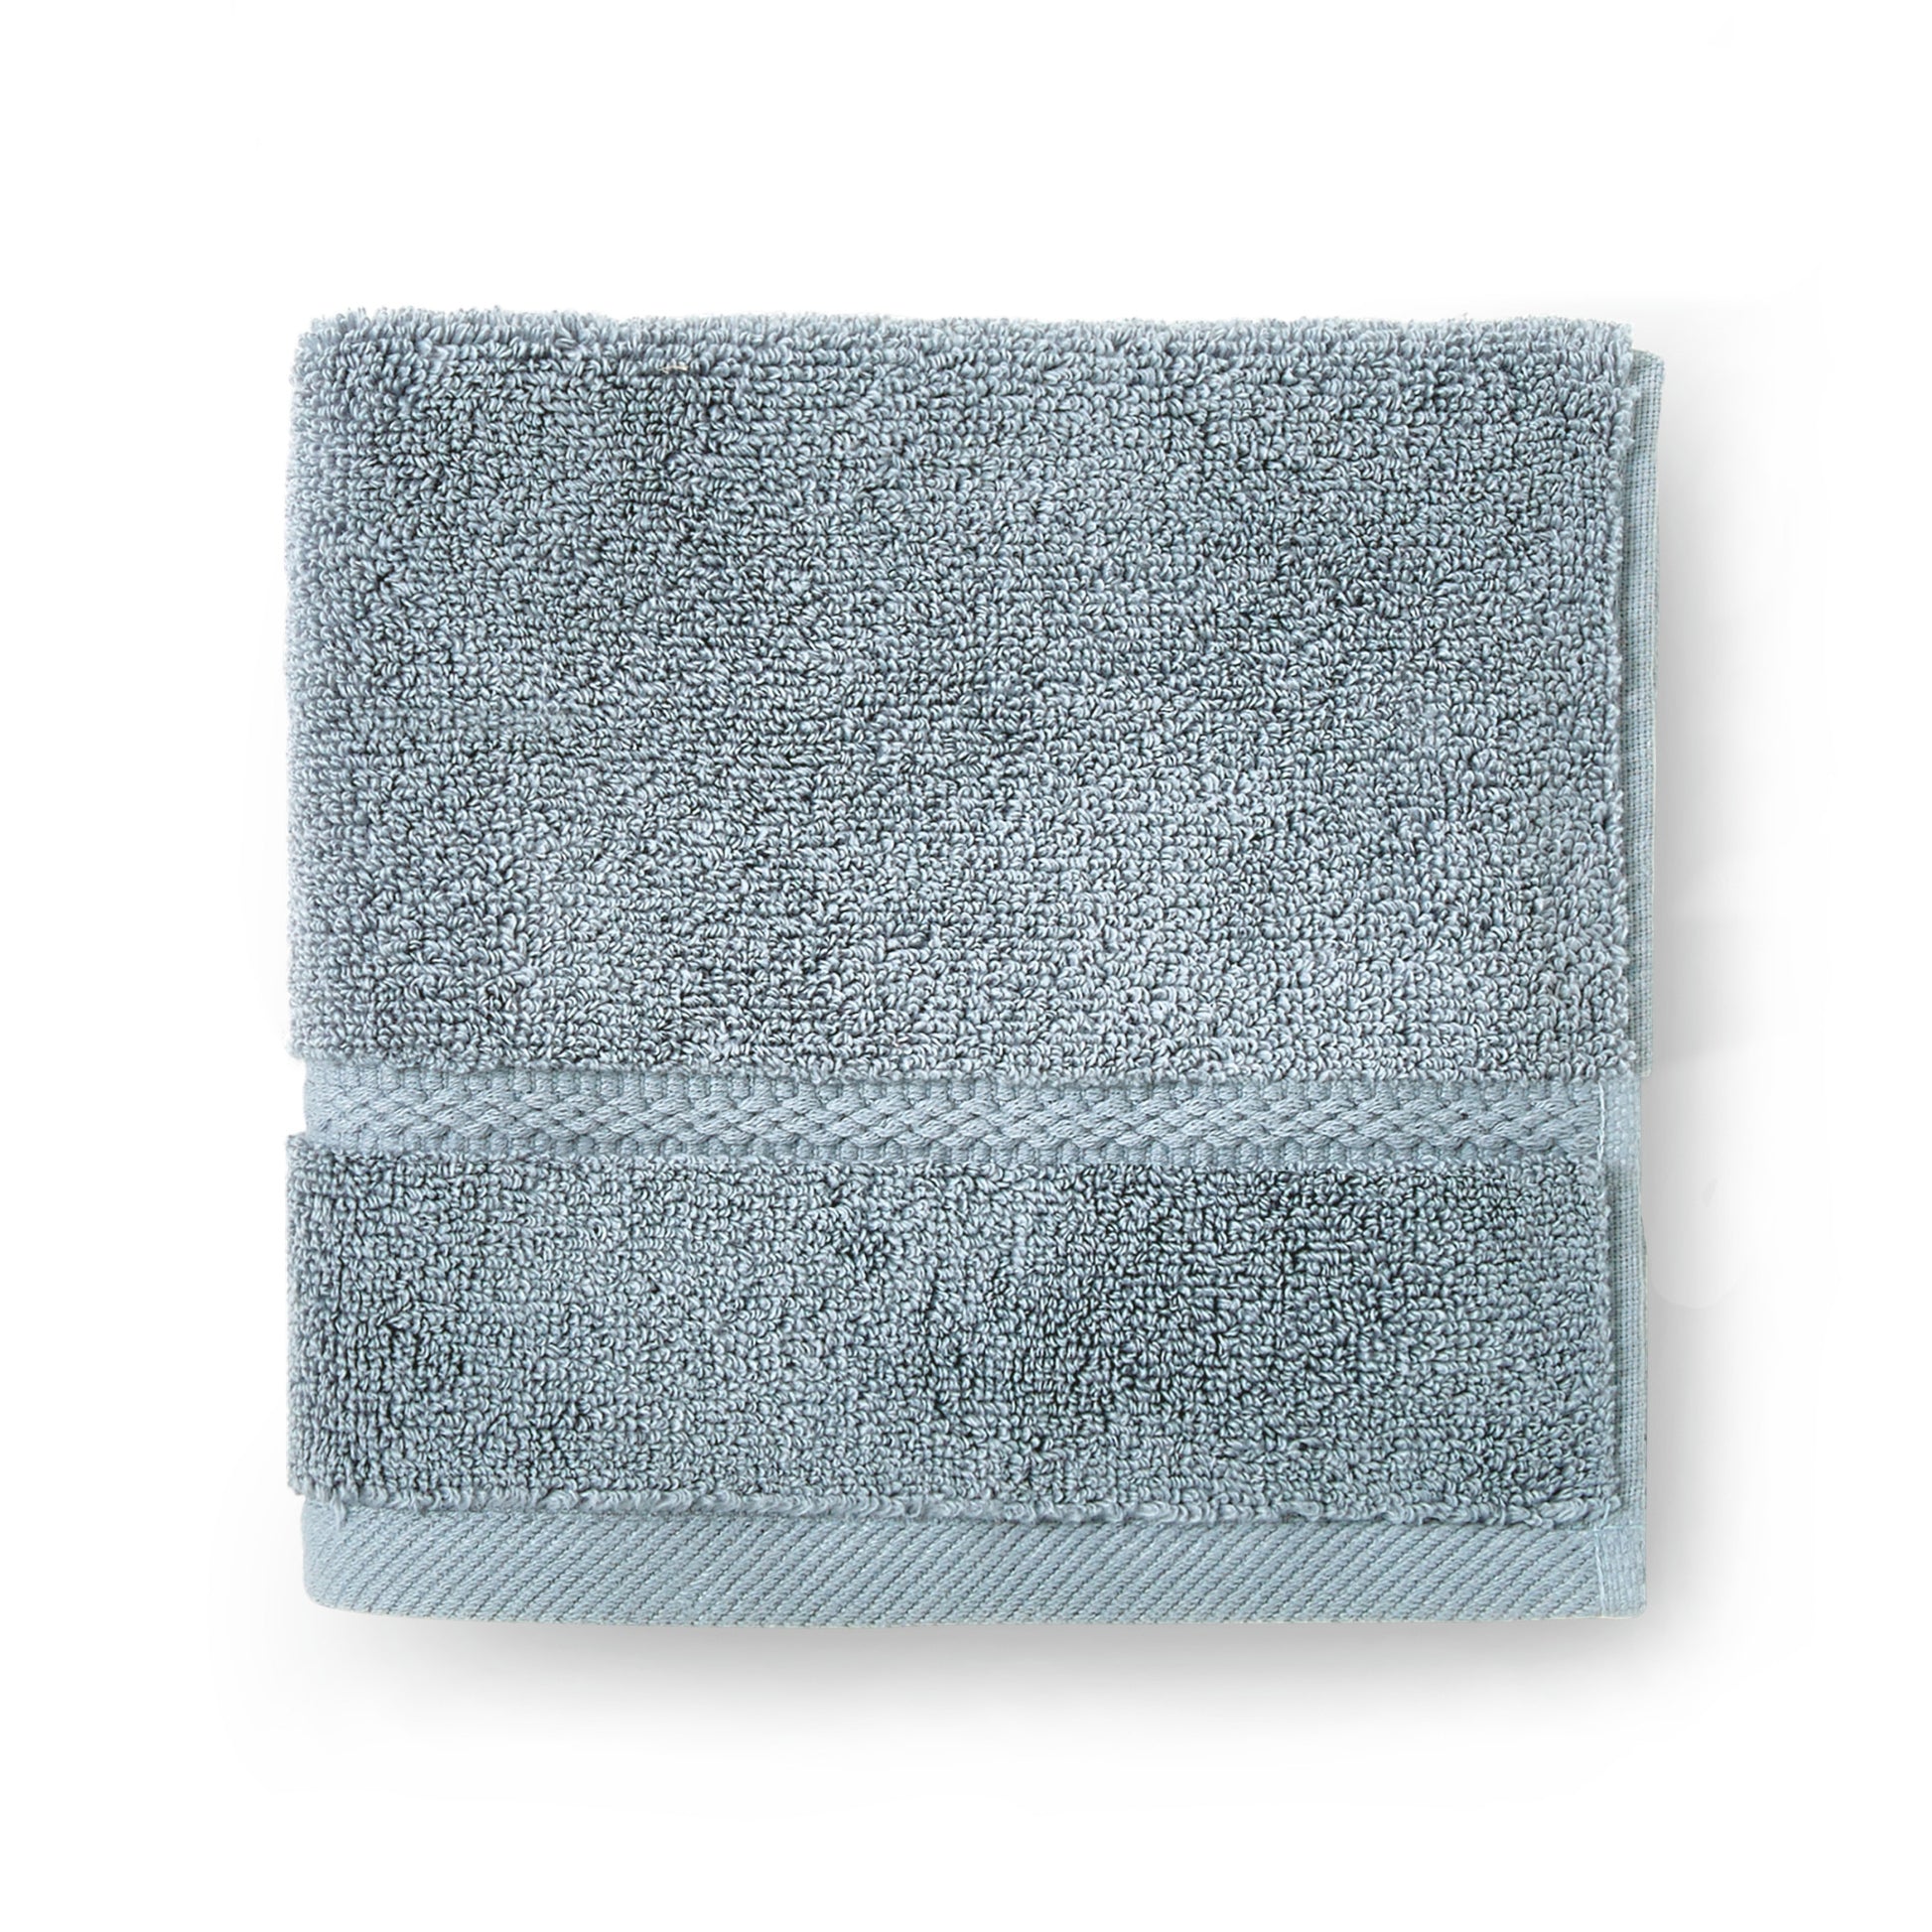 DKNY Ludlow Gray Cotton Hand Towel